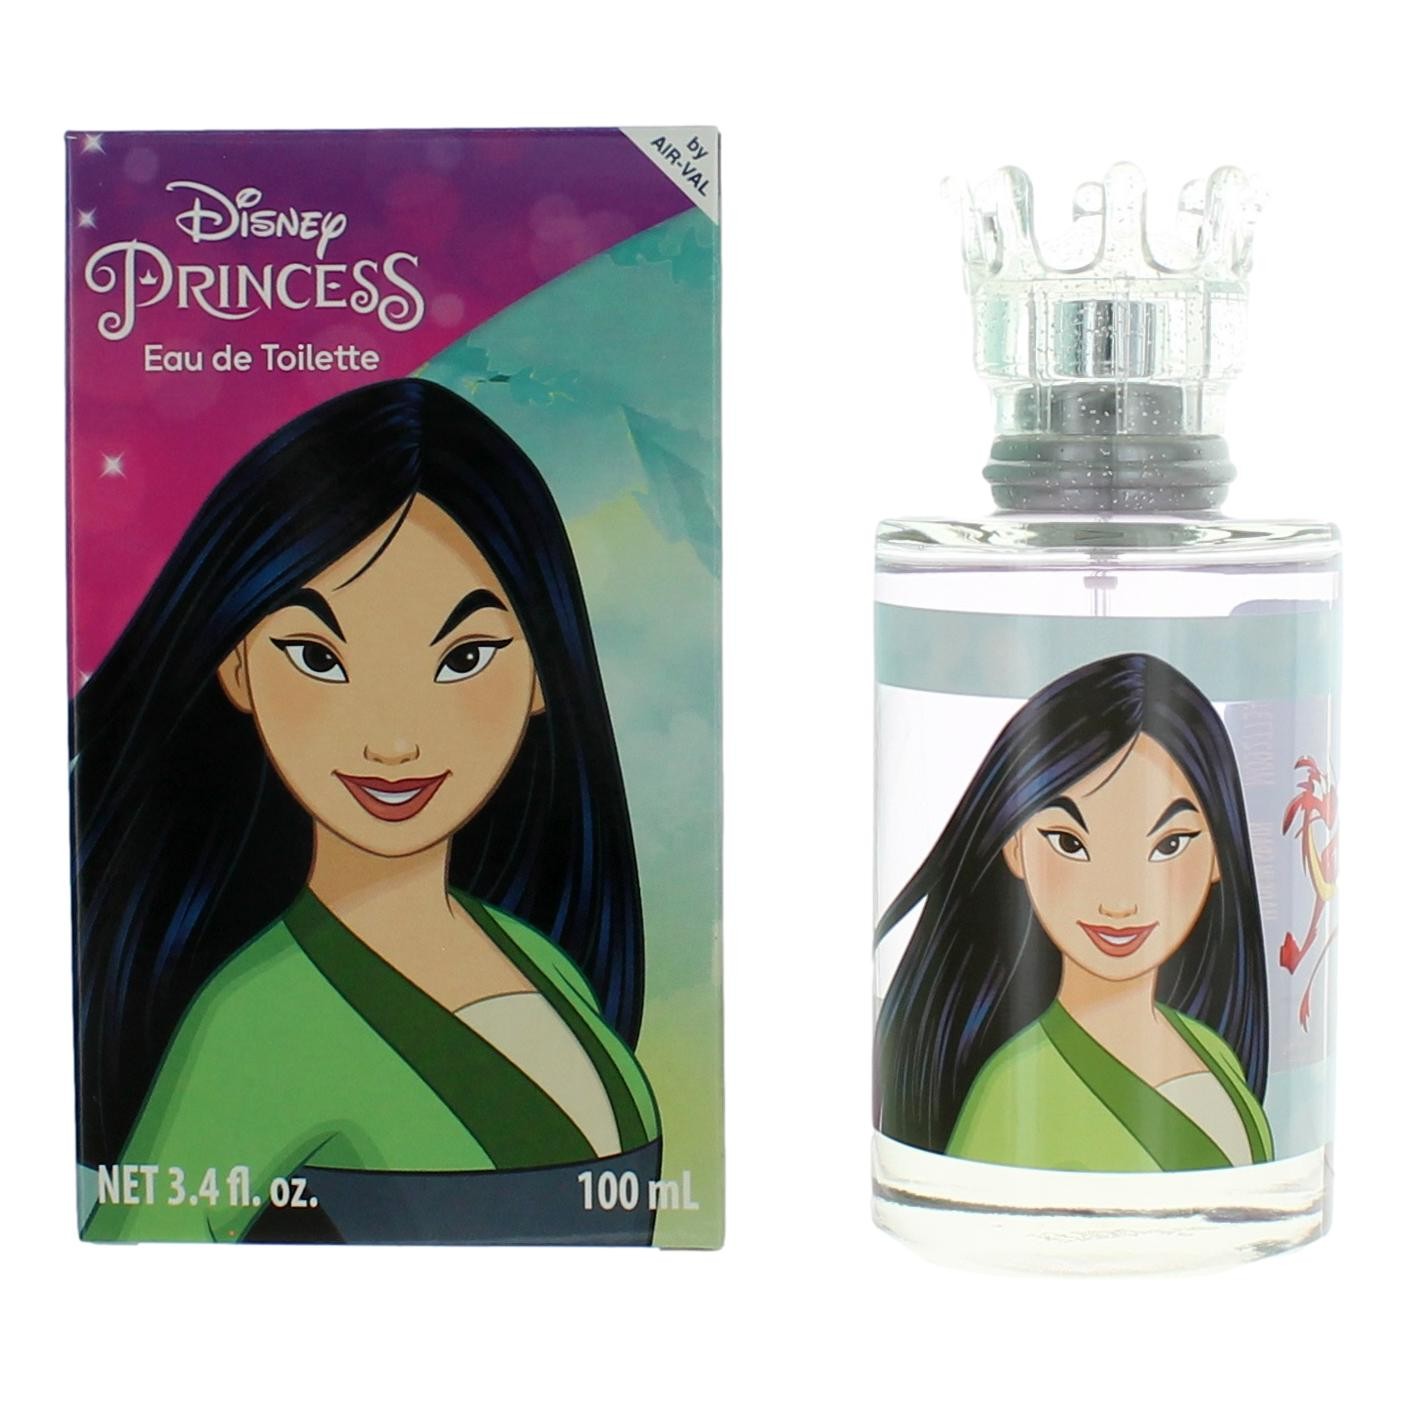 Disney Princess Mulan by Disney Princess, 3.4 oz Eau de Toilette Spray for Girls